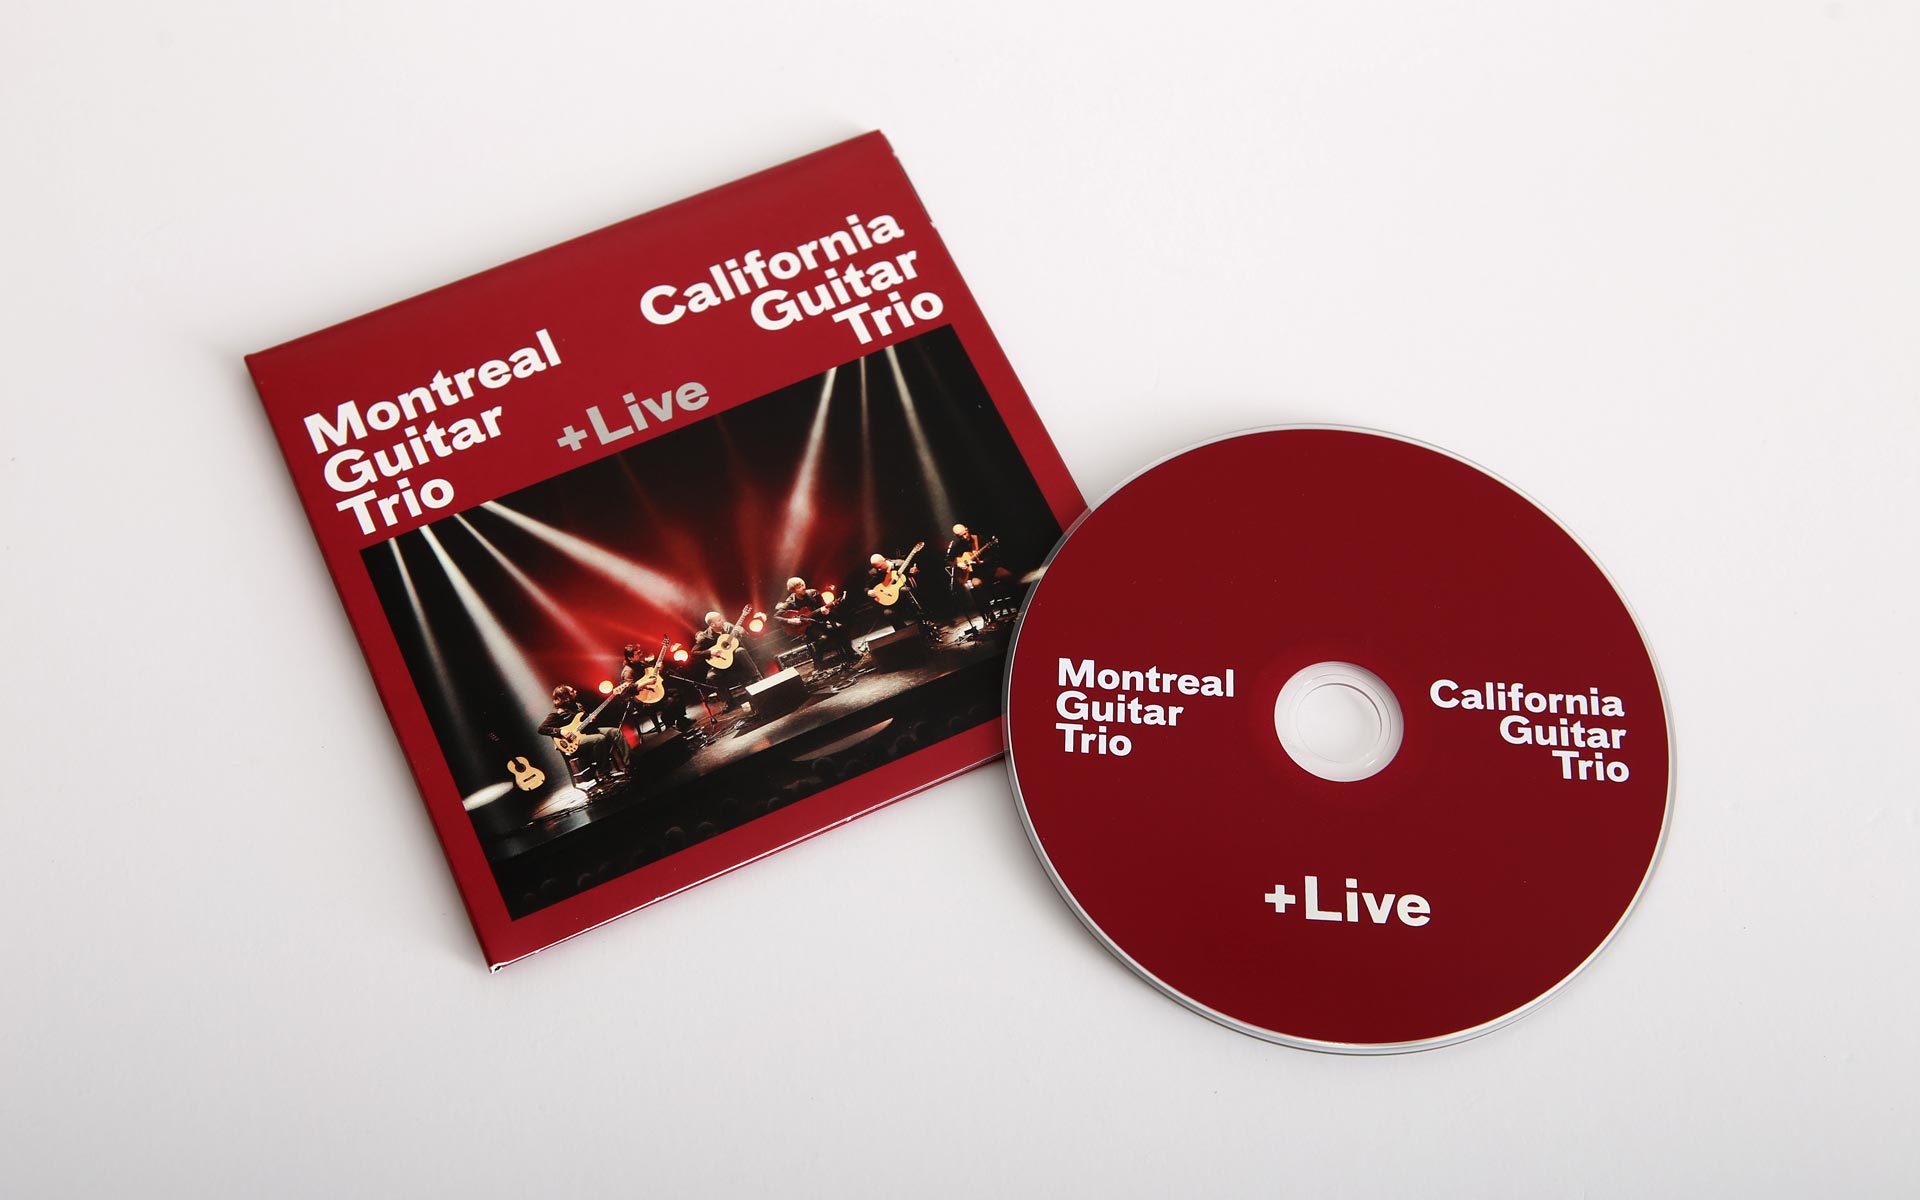 California Guitar Trio + Montreal Guitar Trio CD design